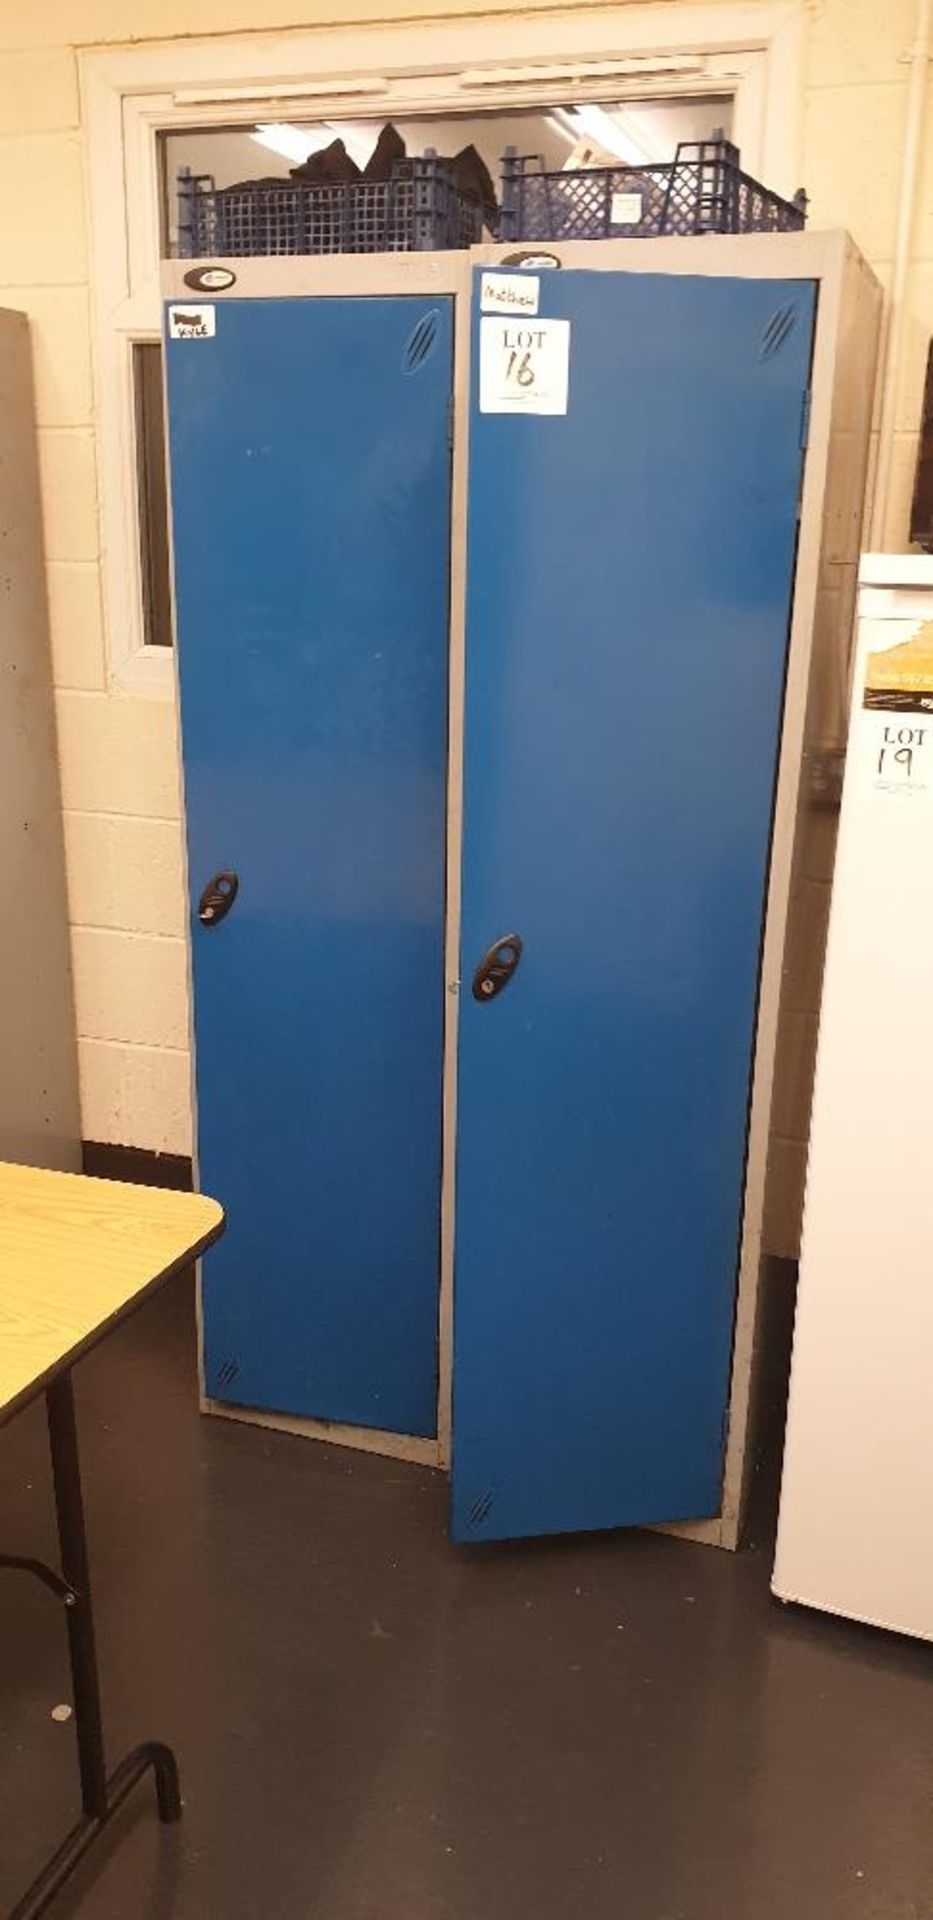 5 - personnel lockers